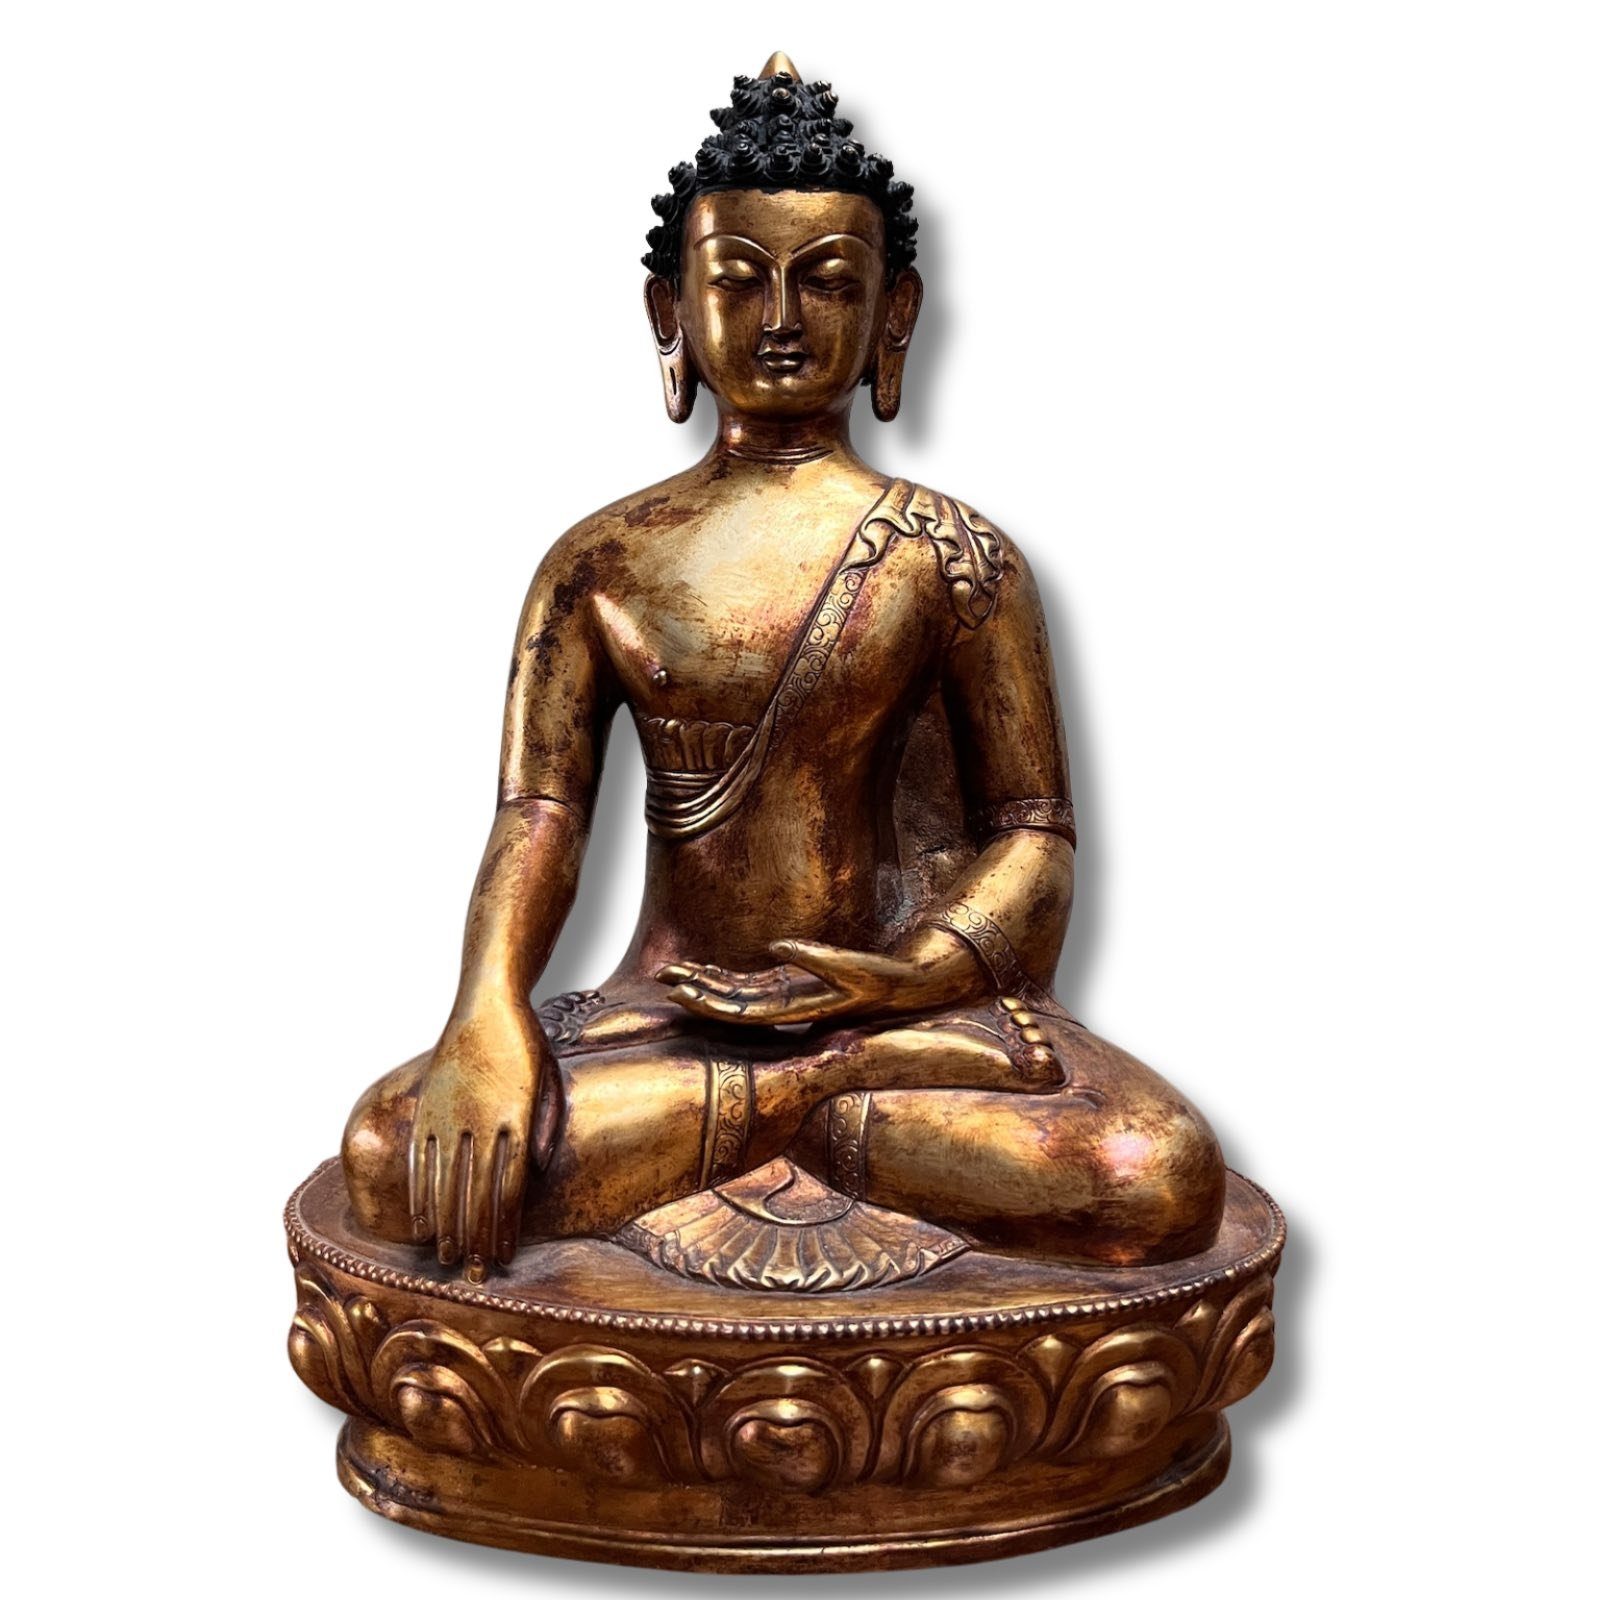 Asien LifeStyle Buddhafigur Buddha Figur Bronze Tibet vergoldete Skulptur 31cm groß Qualität